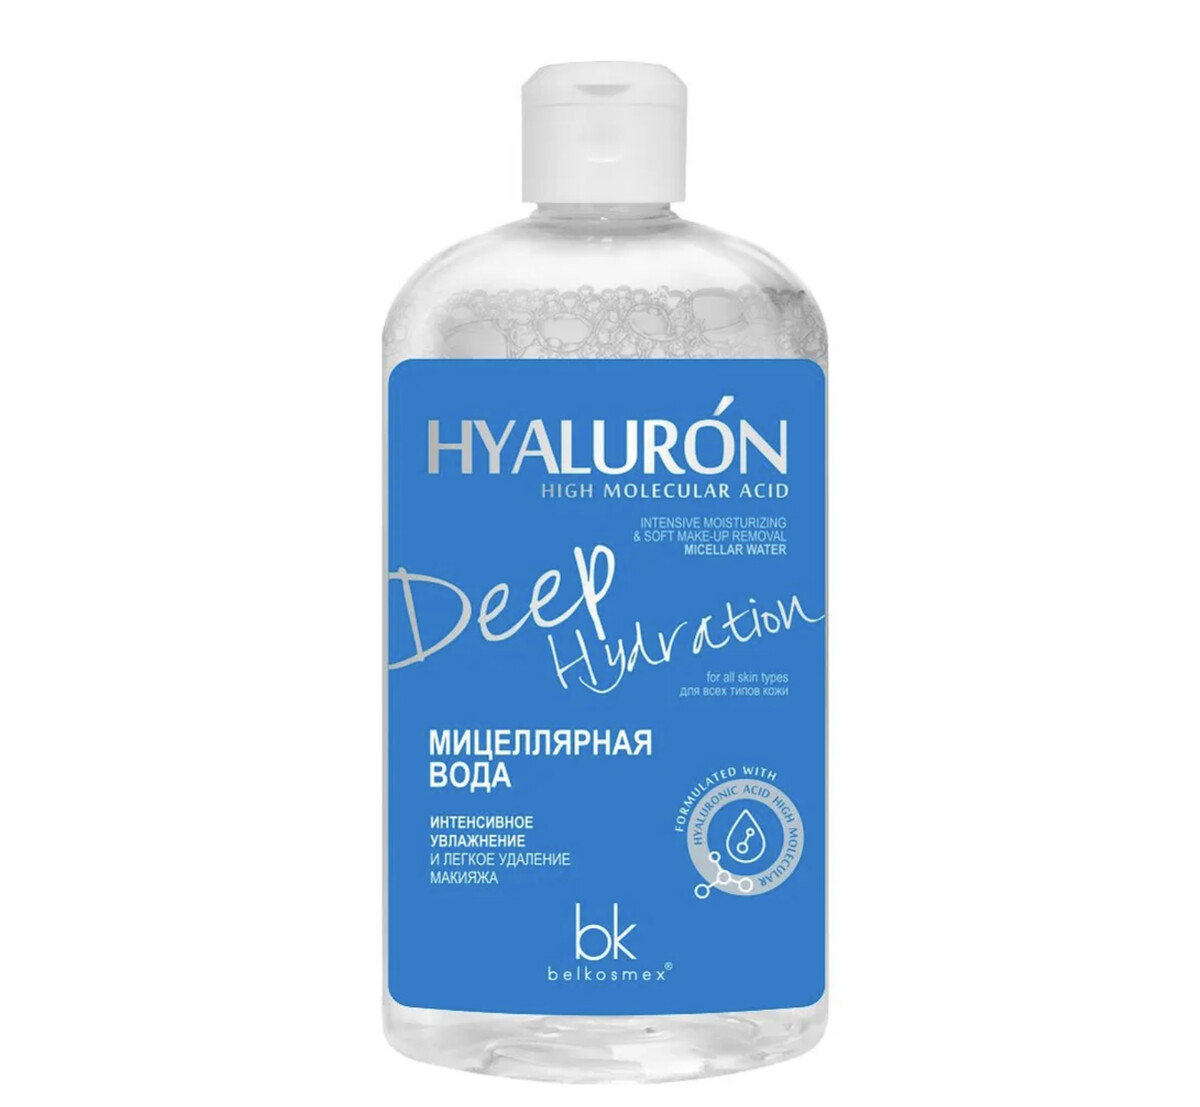 Hialuron deep hydration мицеллярная вода интенсивное увлажнение 500г мицеллярная вода для снятия макияжа